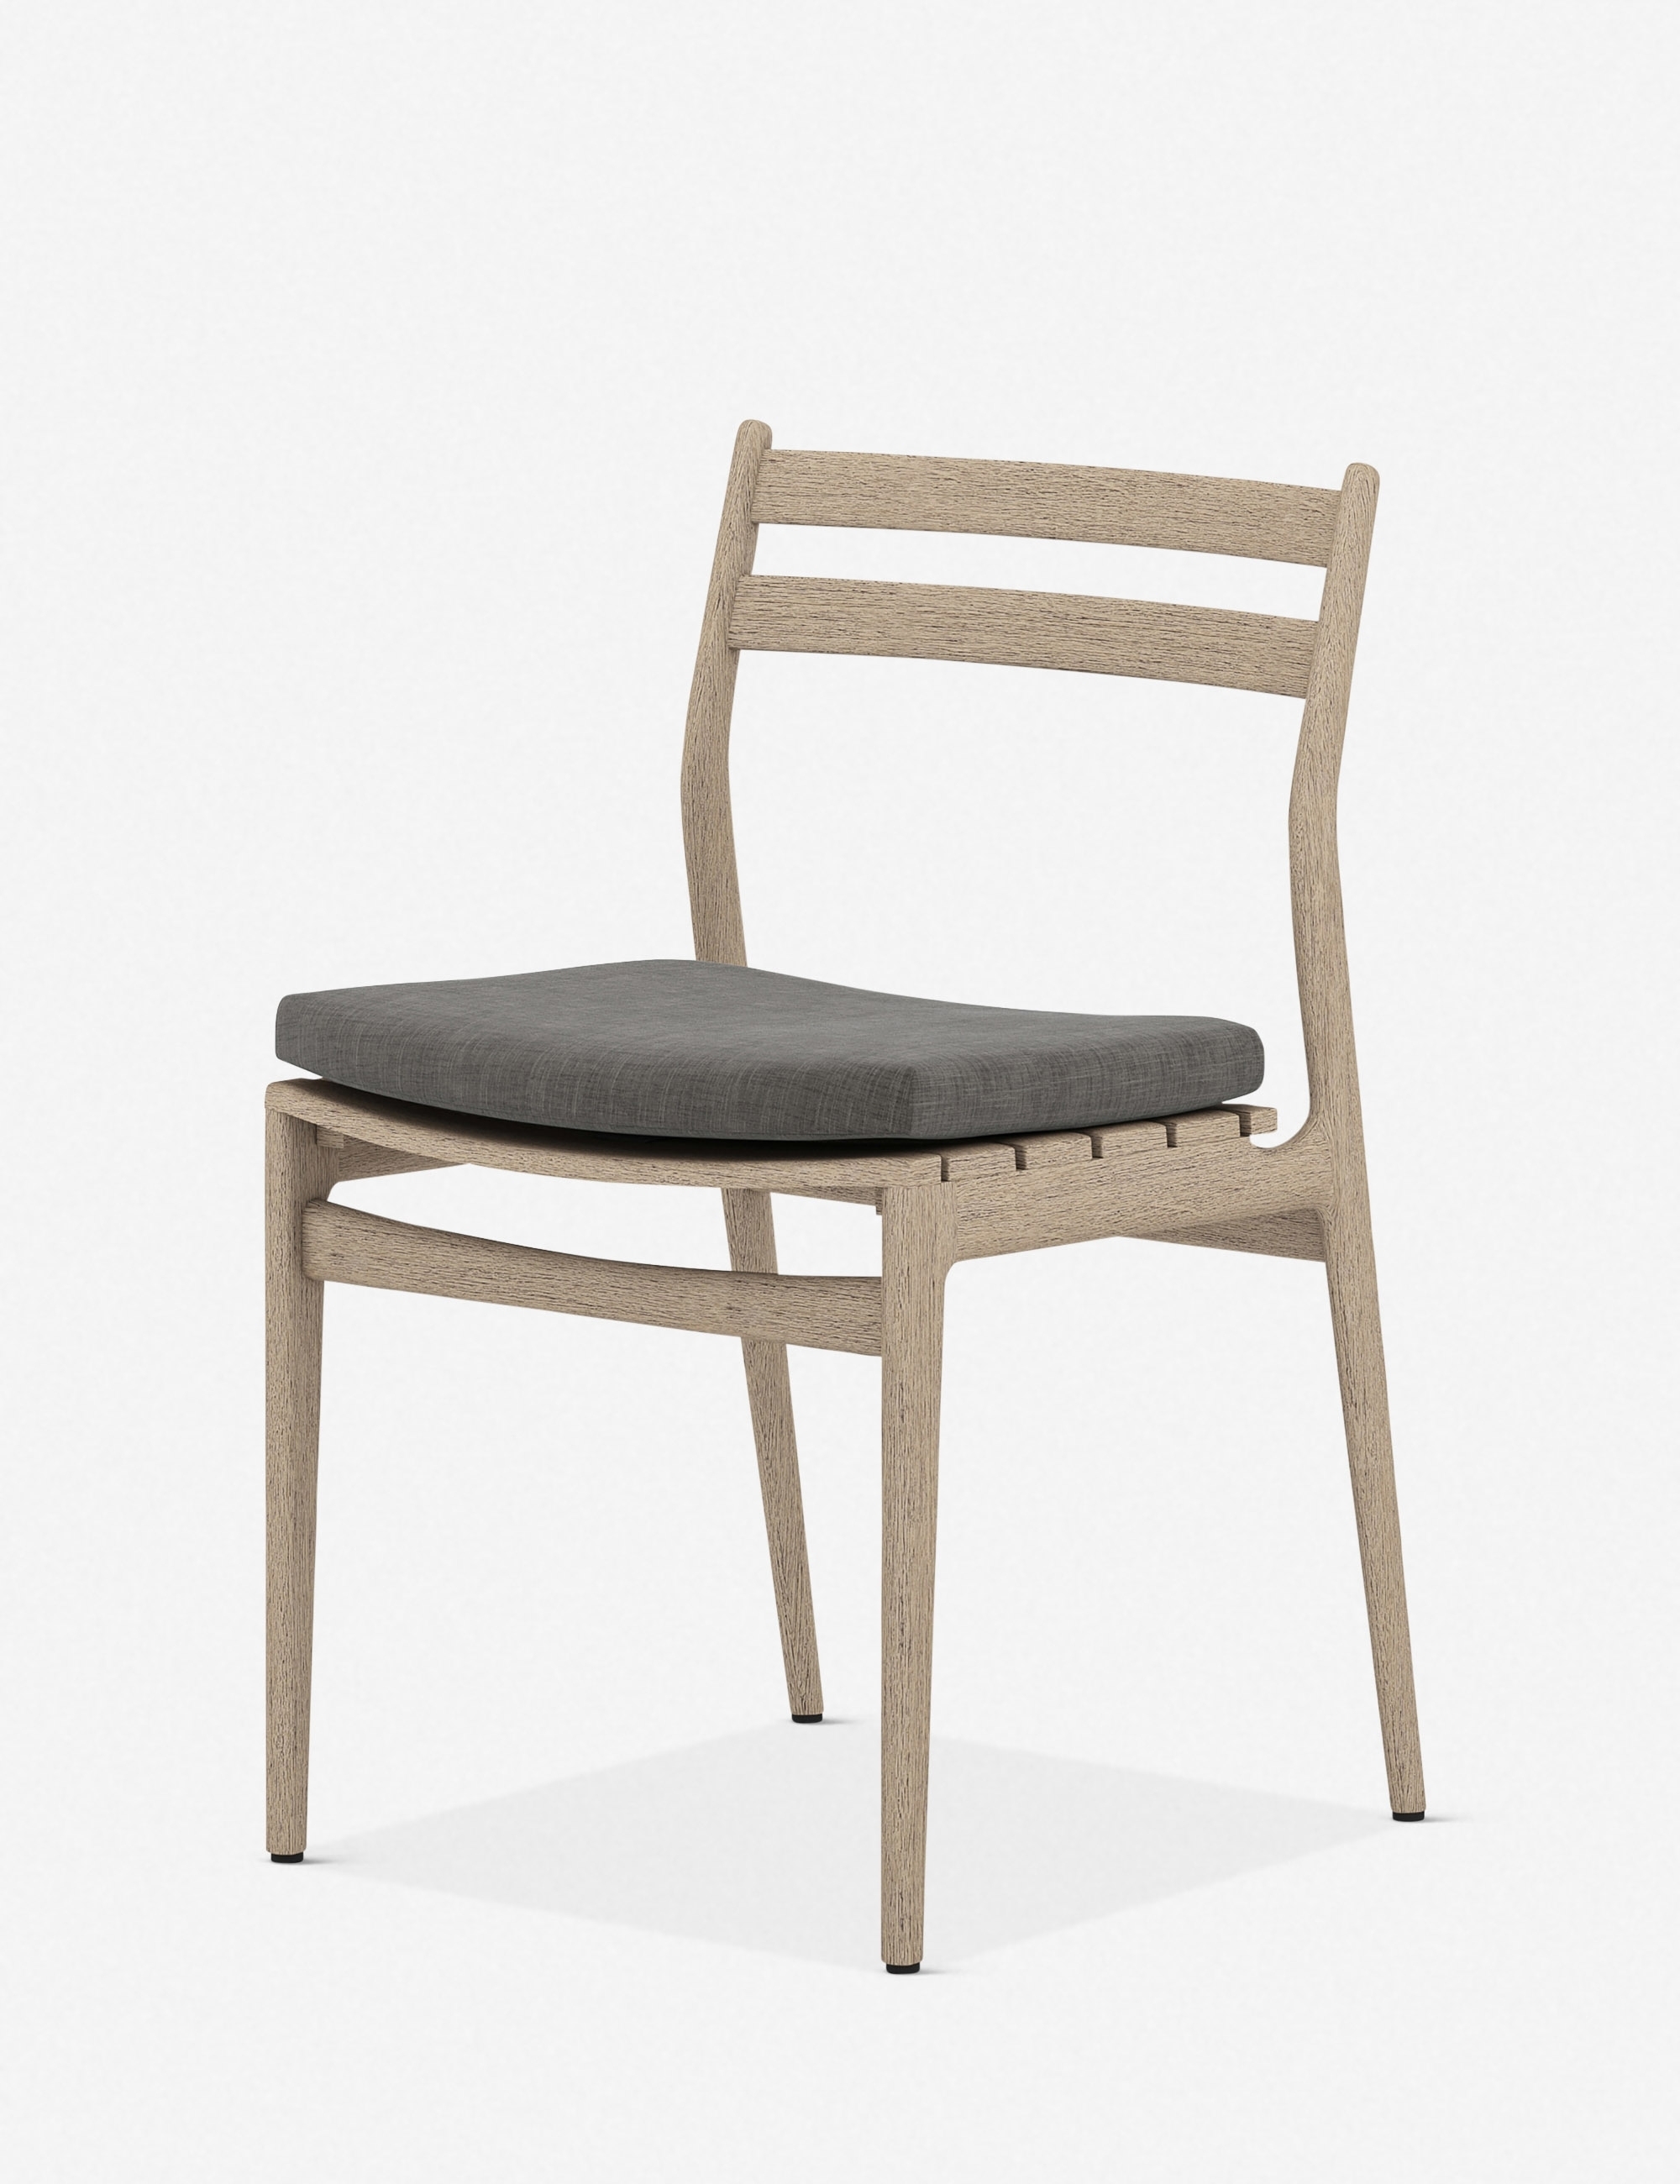 Oleena Outdoor Dining Chair - Image 1